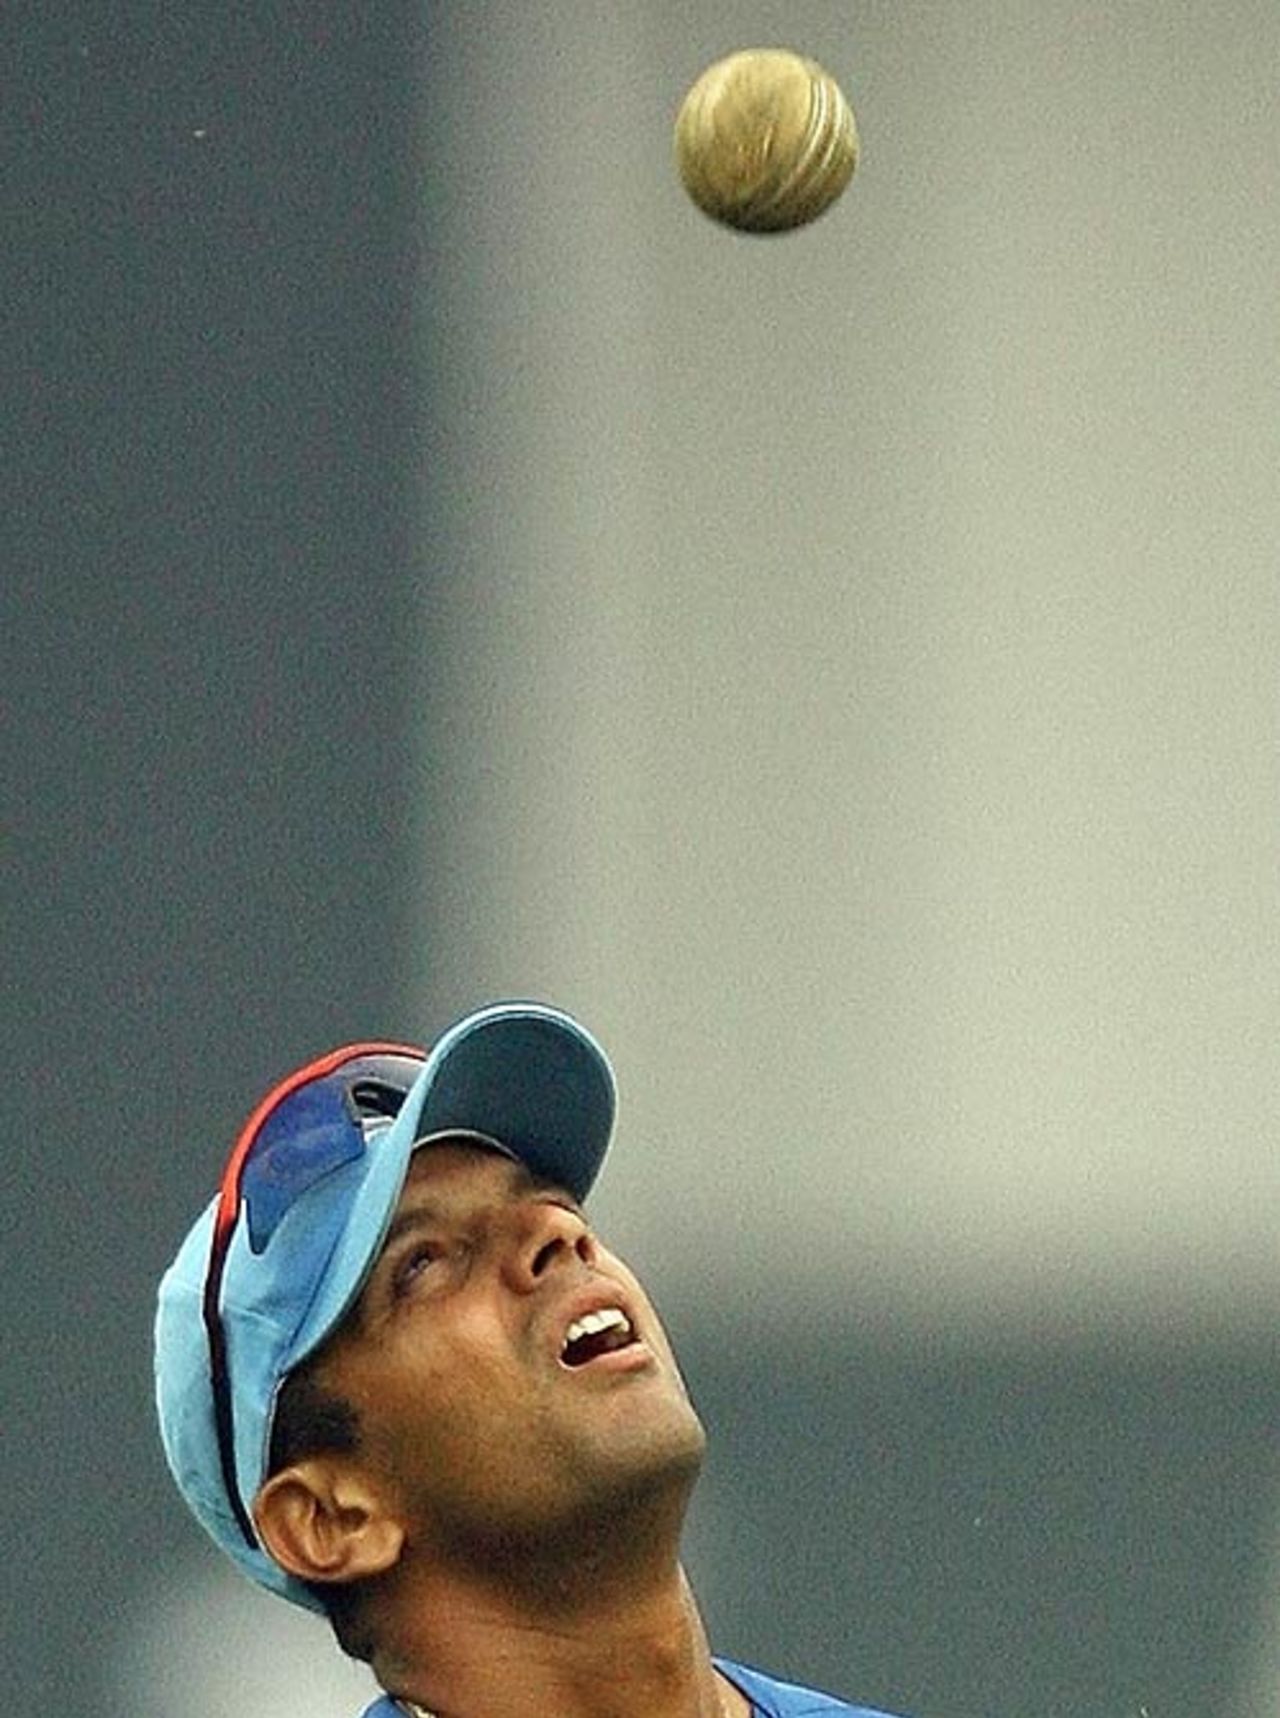 Rahul Dravid gets underneath the ball during training, Vadodara, January 29, 2007